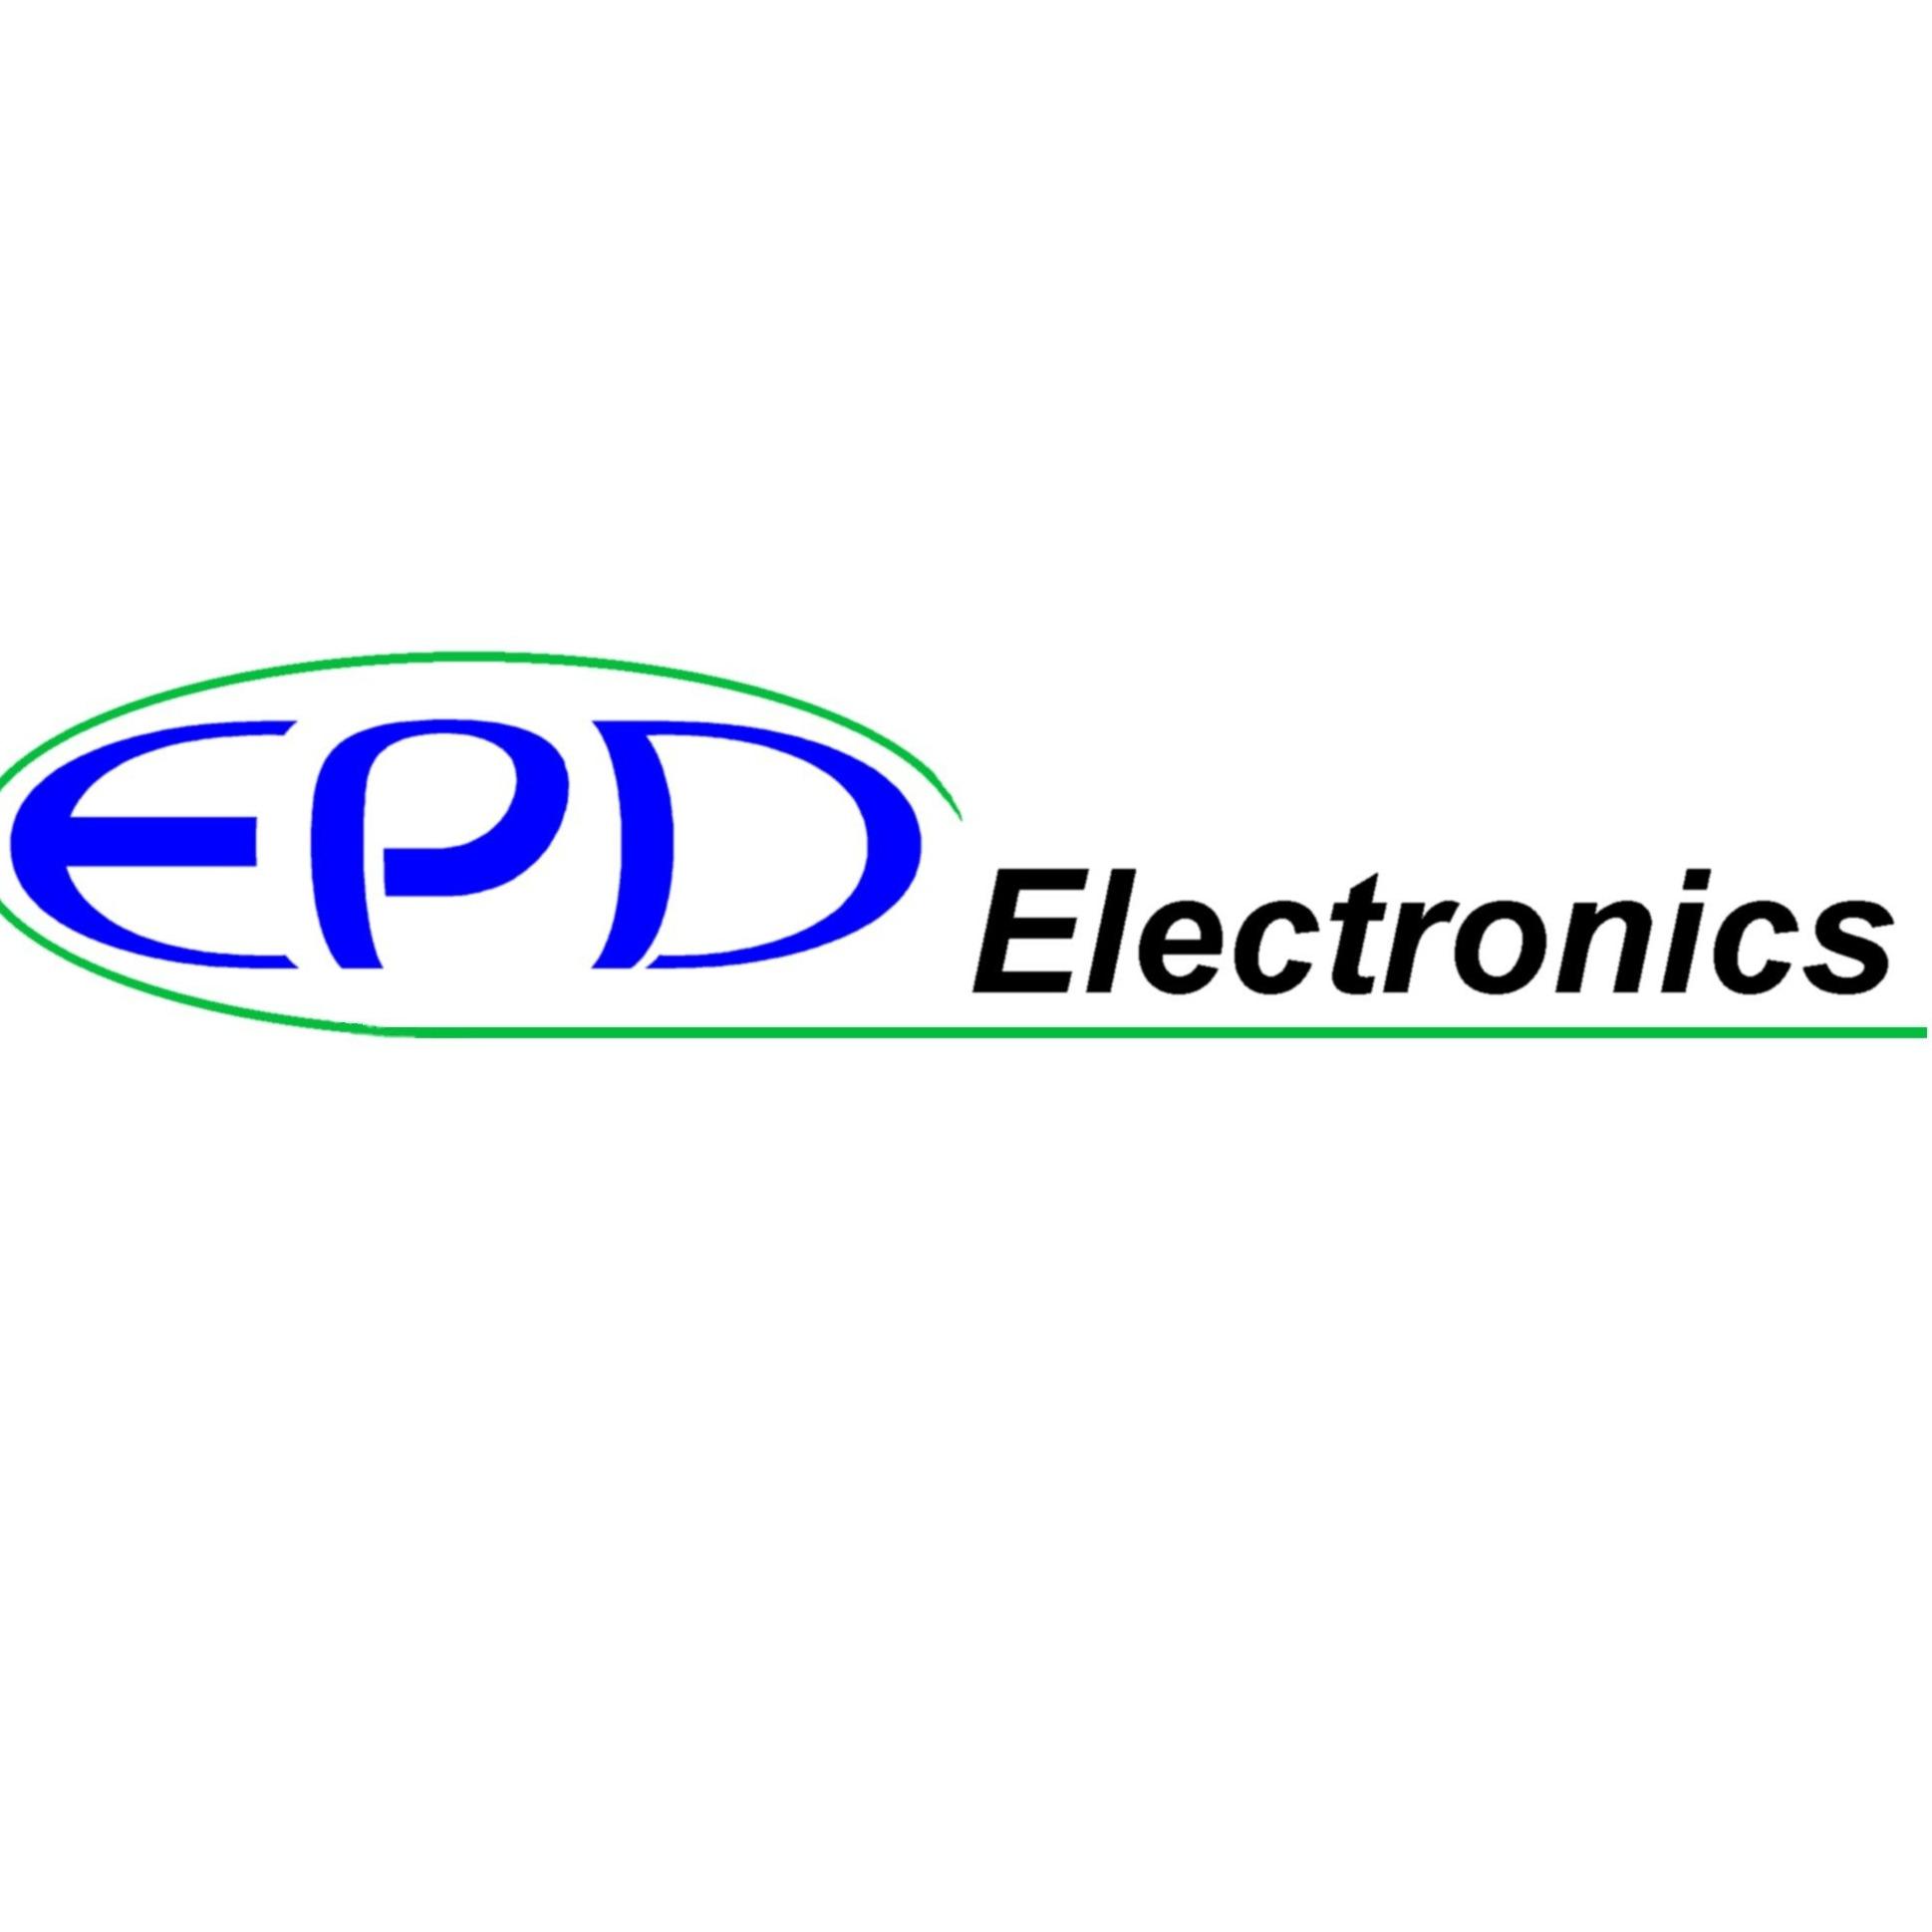 EPD Electronics Inc.